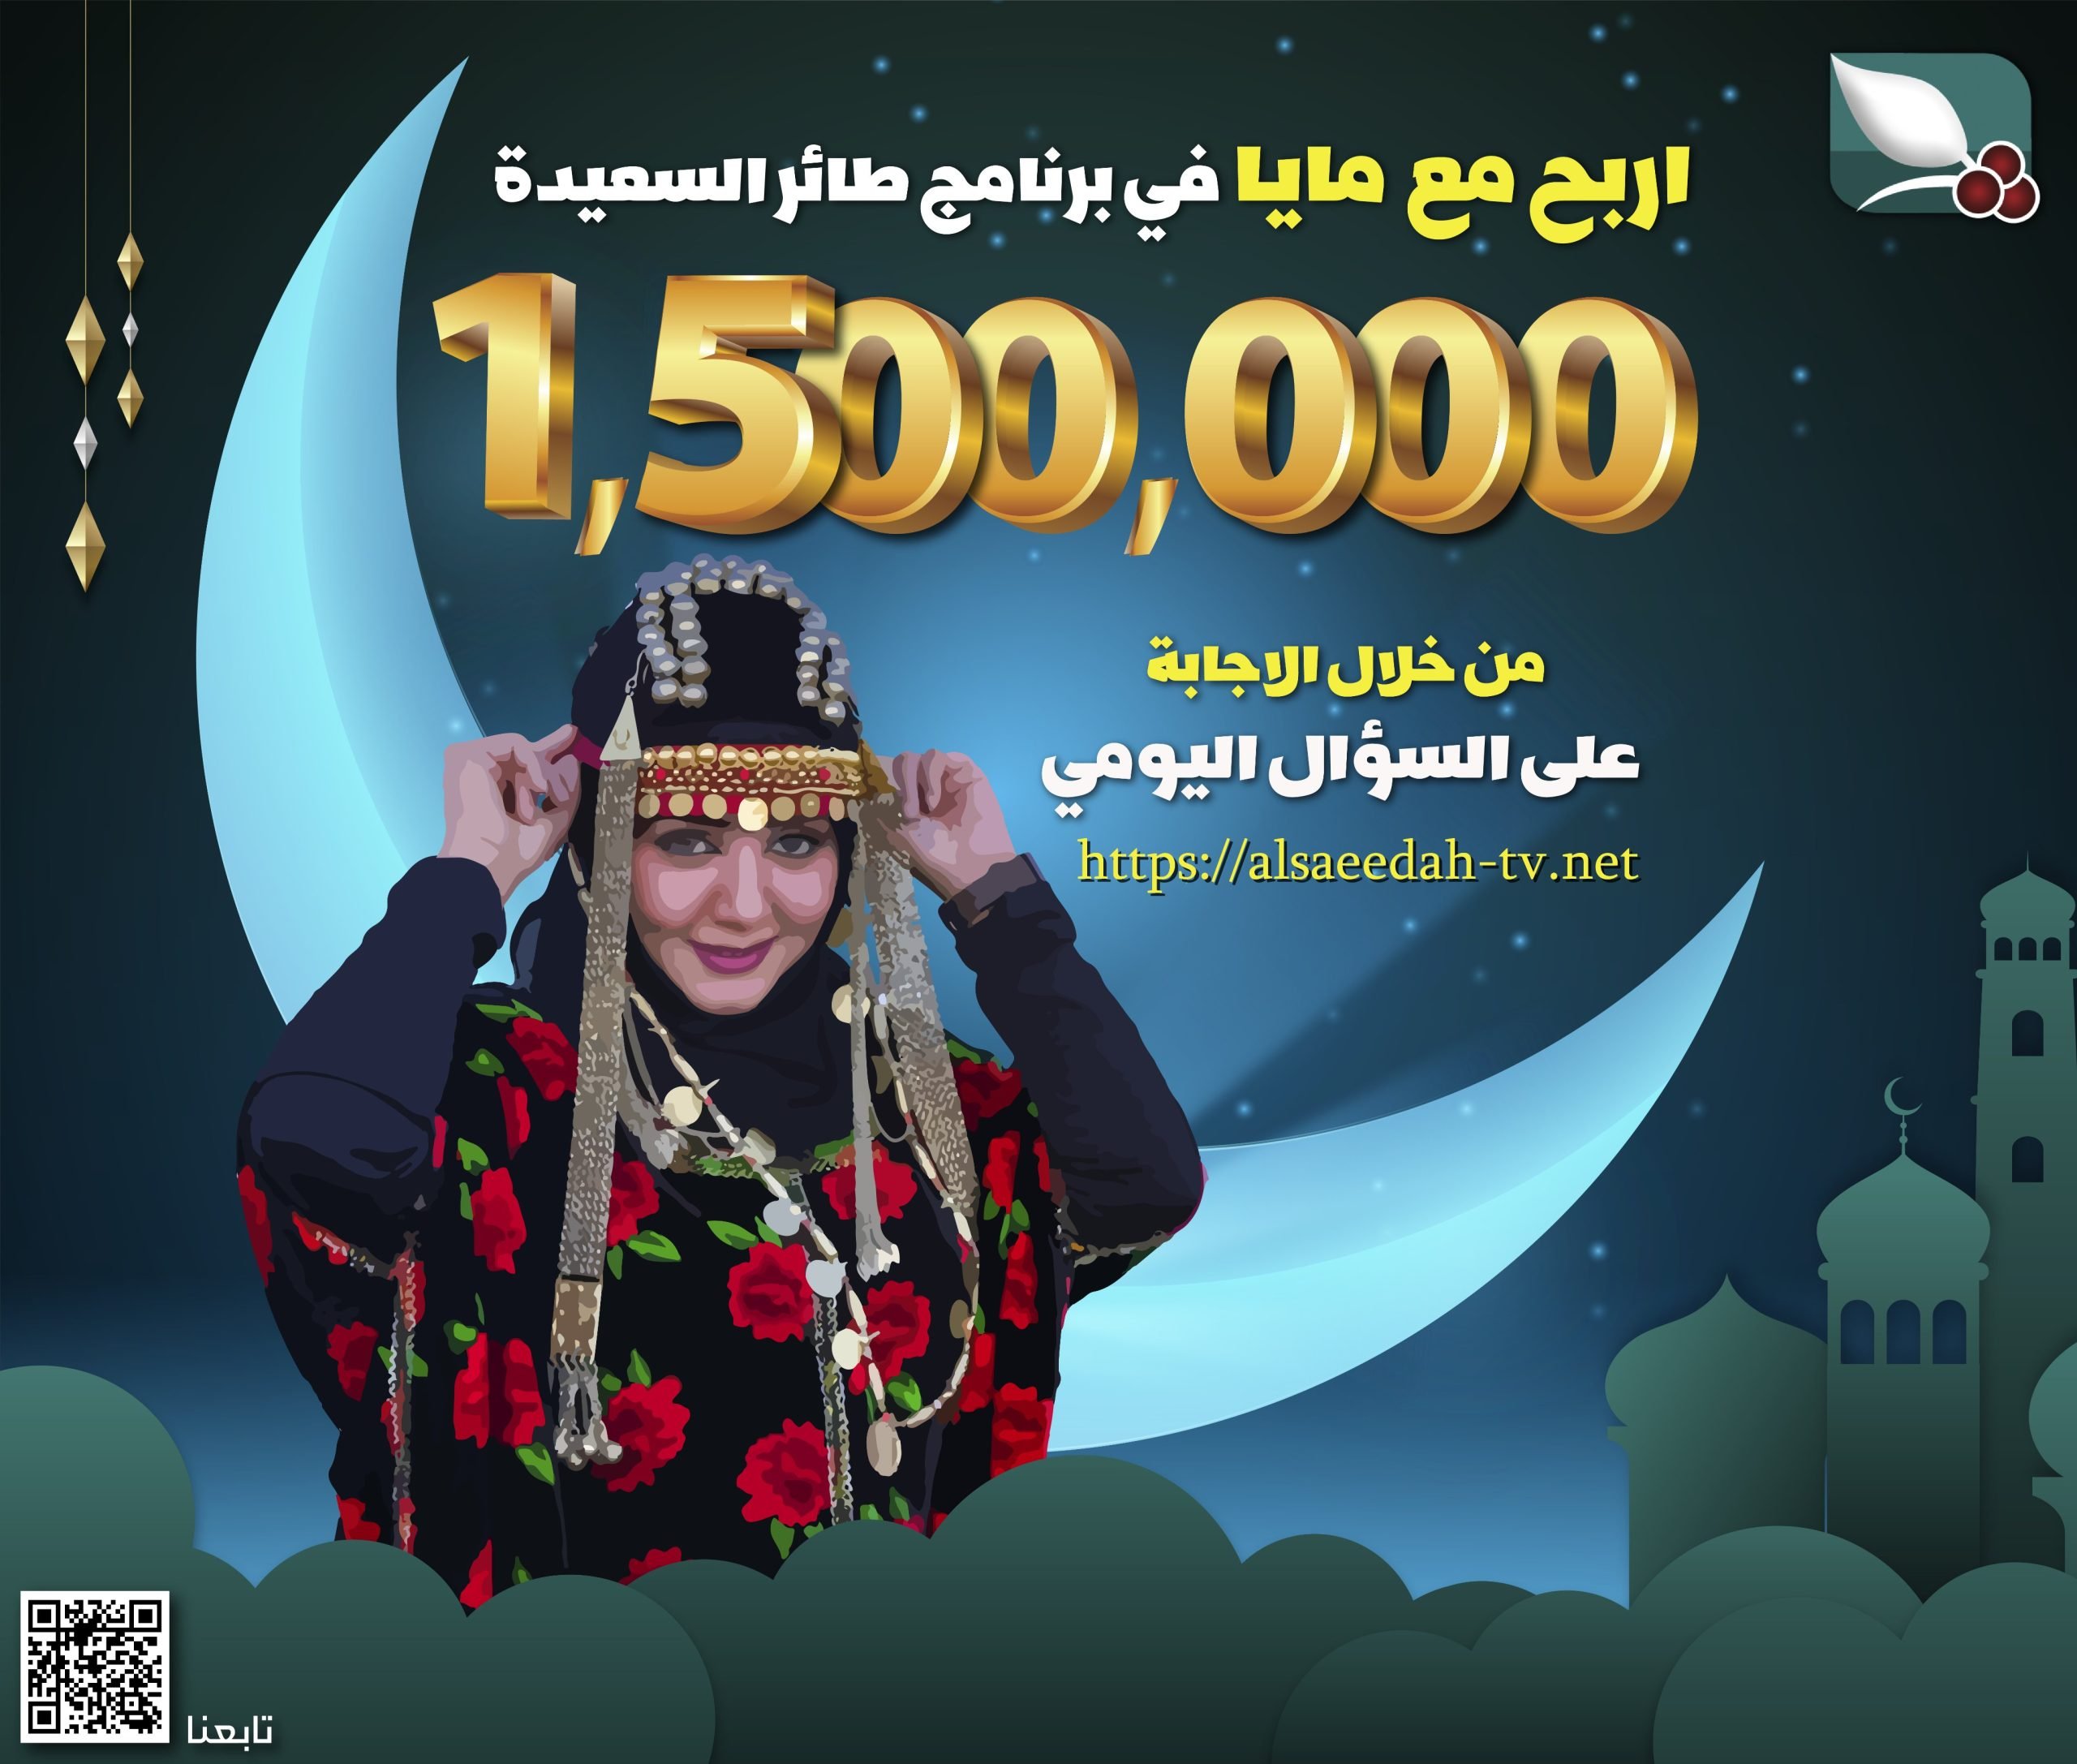 alsaeedah-tv.net رابط مسابقة طائر السعيدة 2023 اليمنية